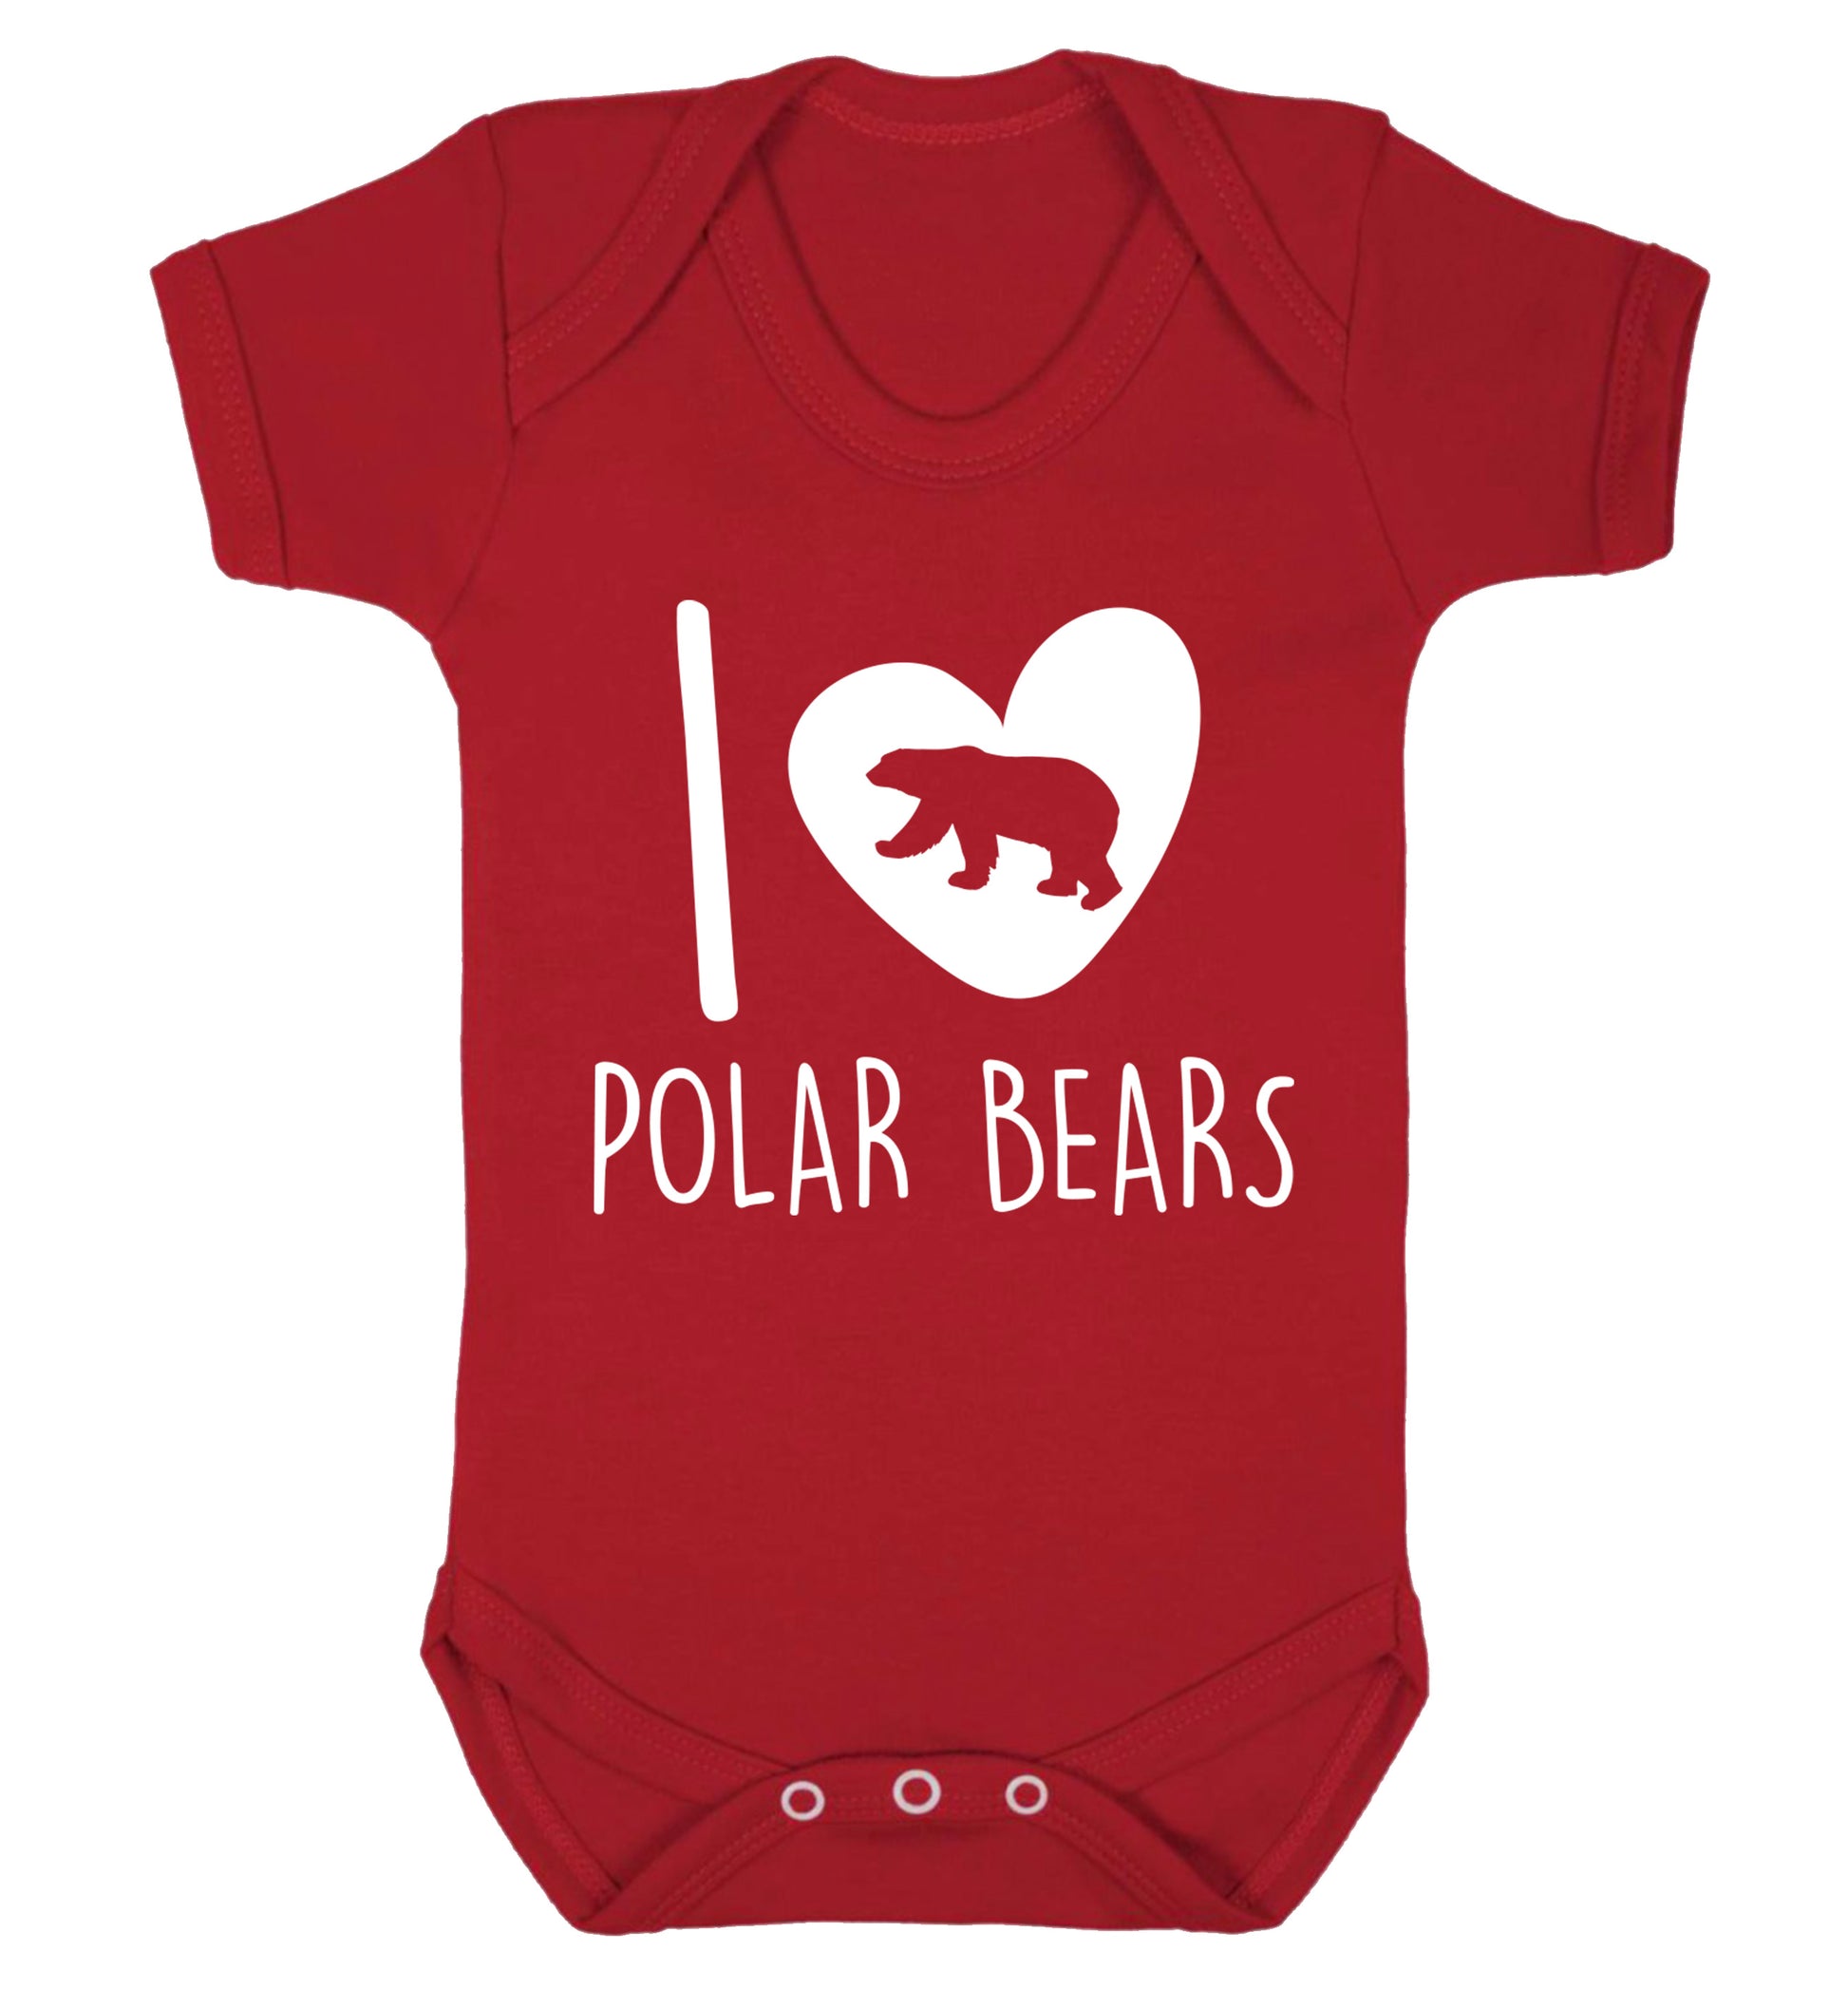 I Love Polar Bears Baby Vest red 18-24 months